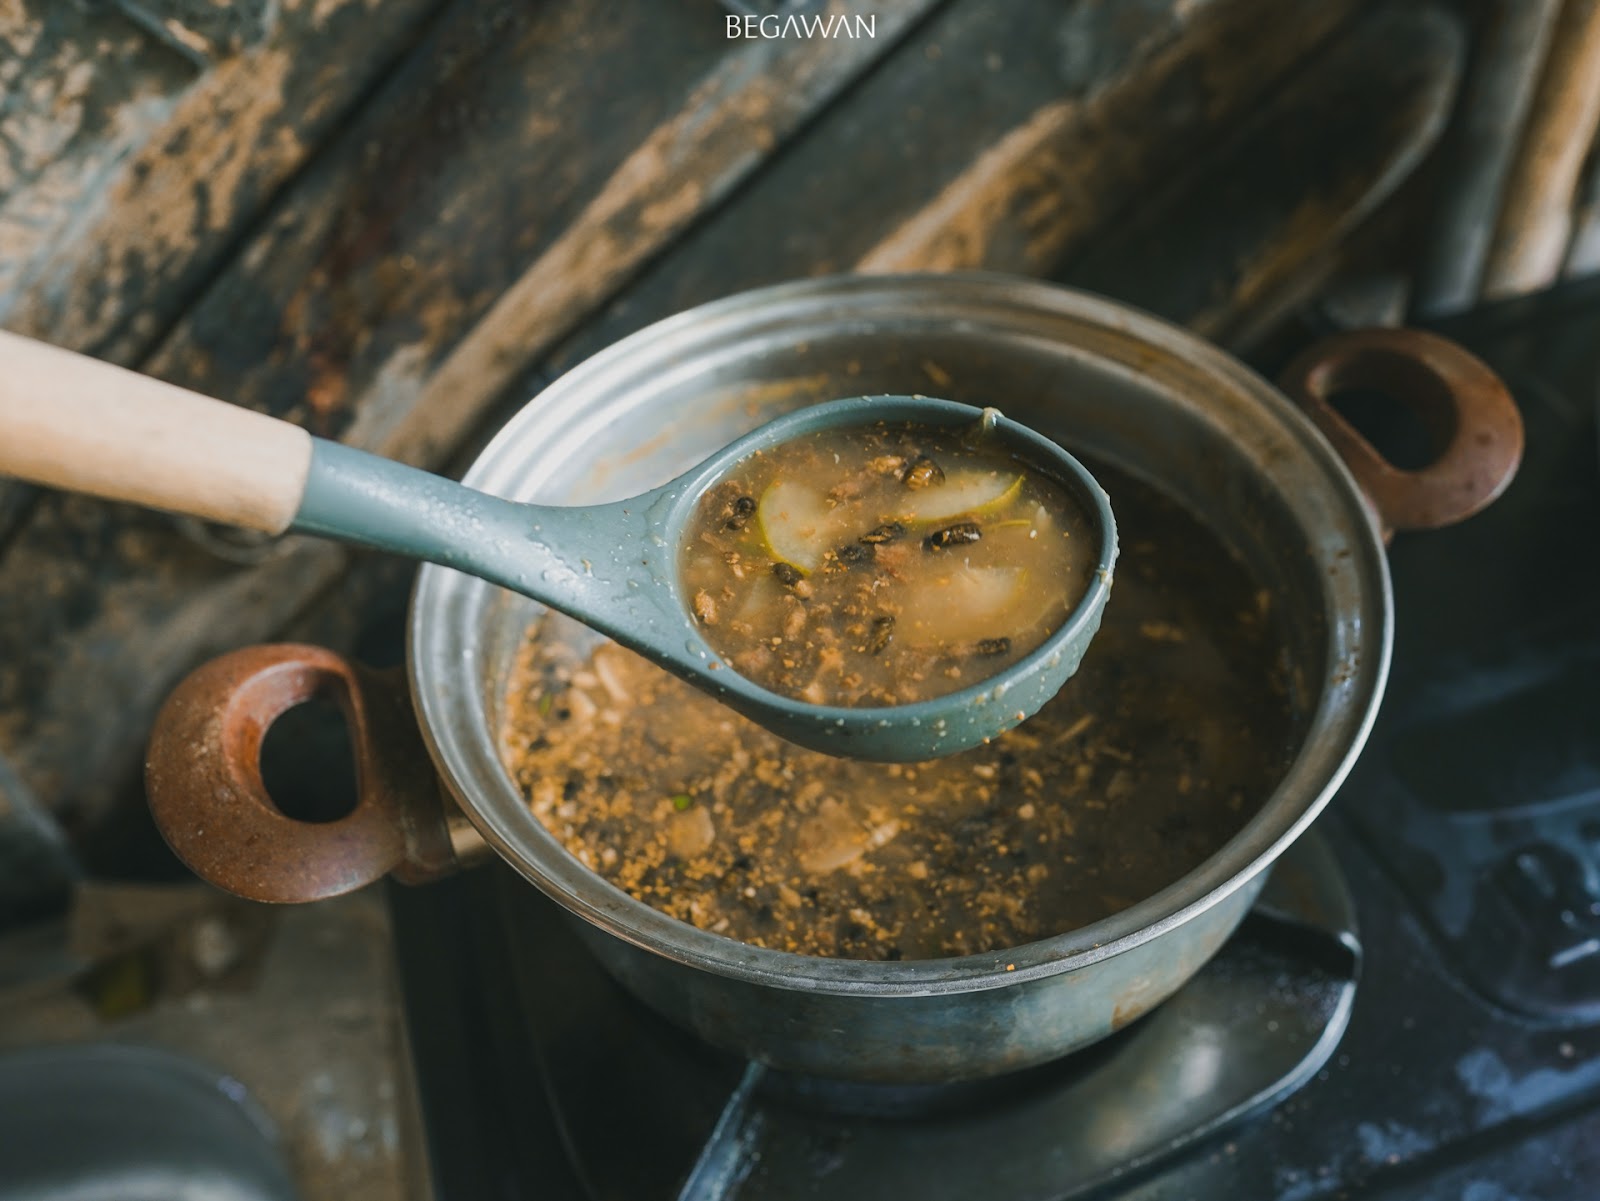 Facilitator cooked lawar nyawan for students to taste